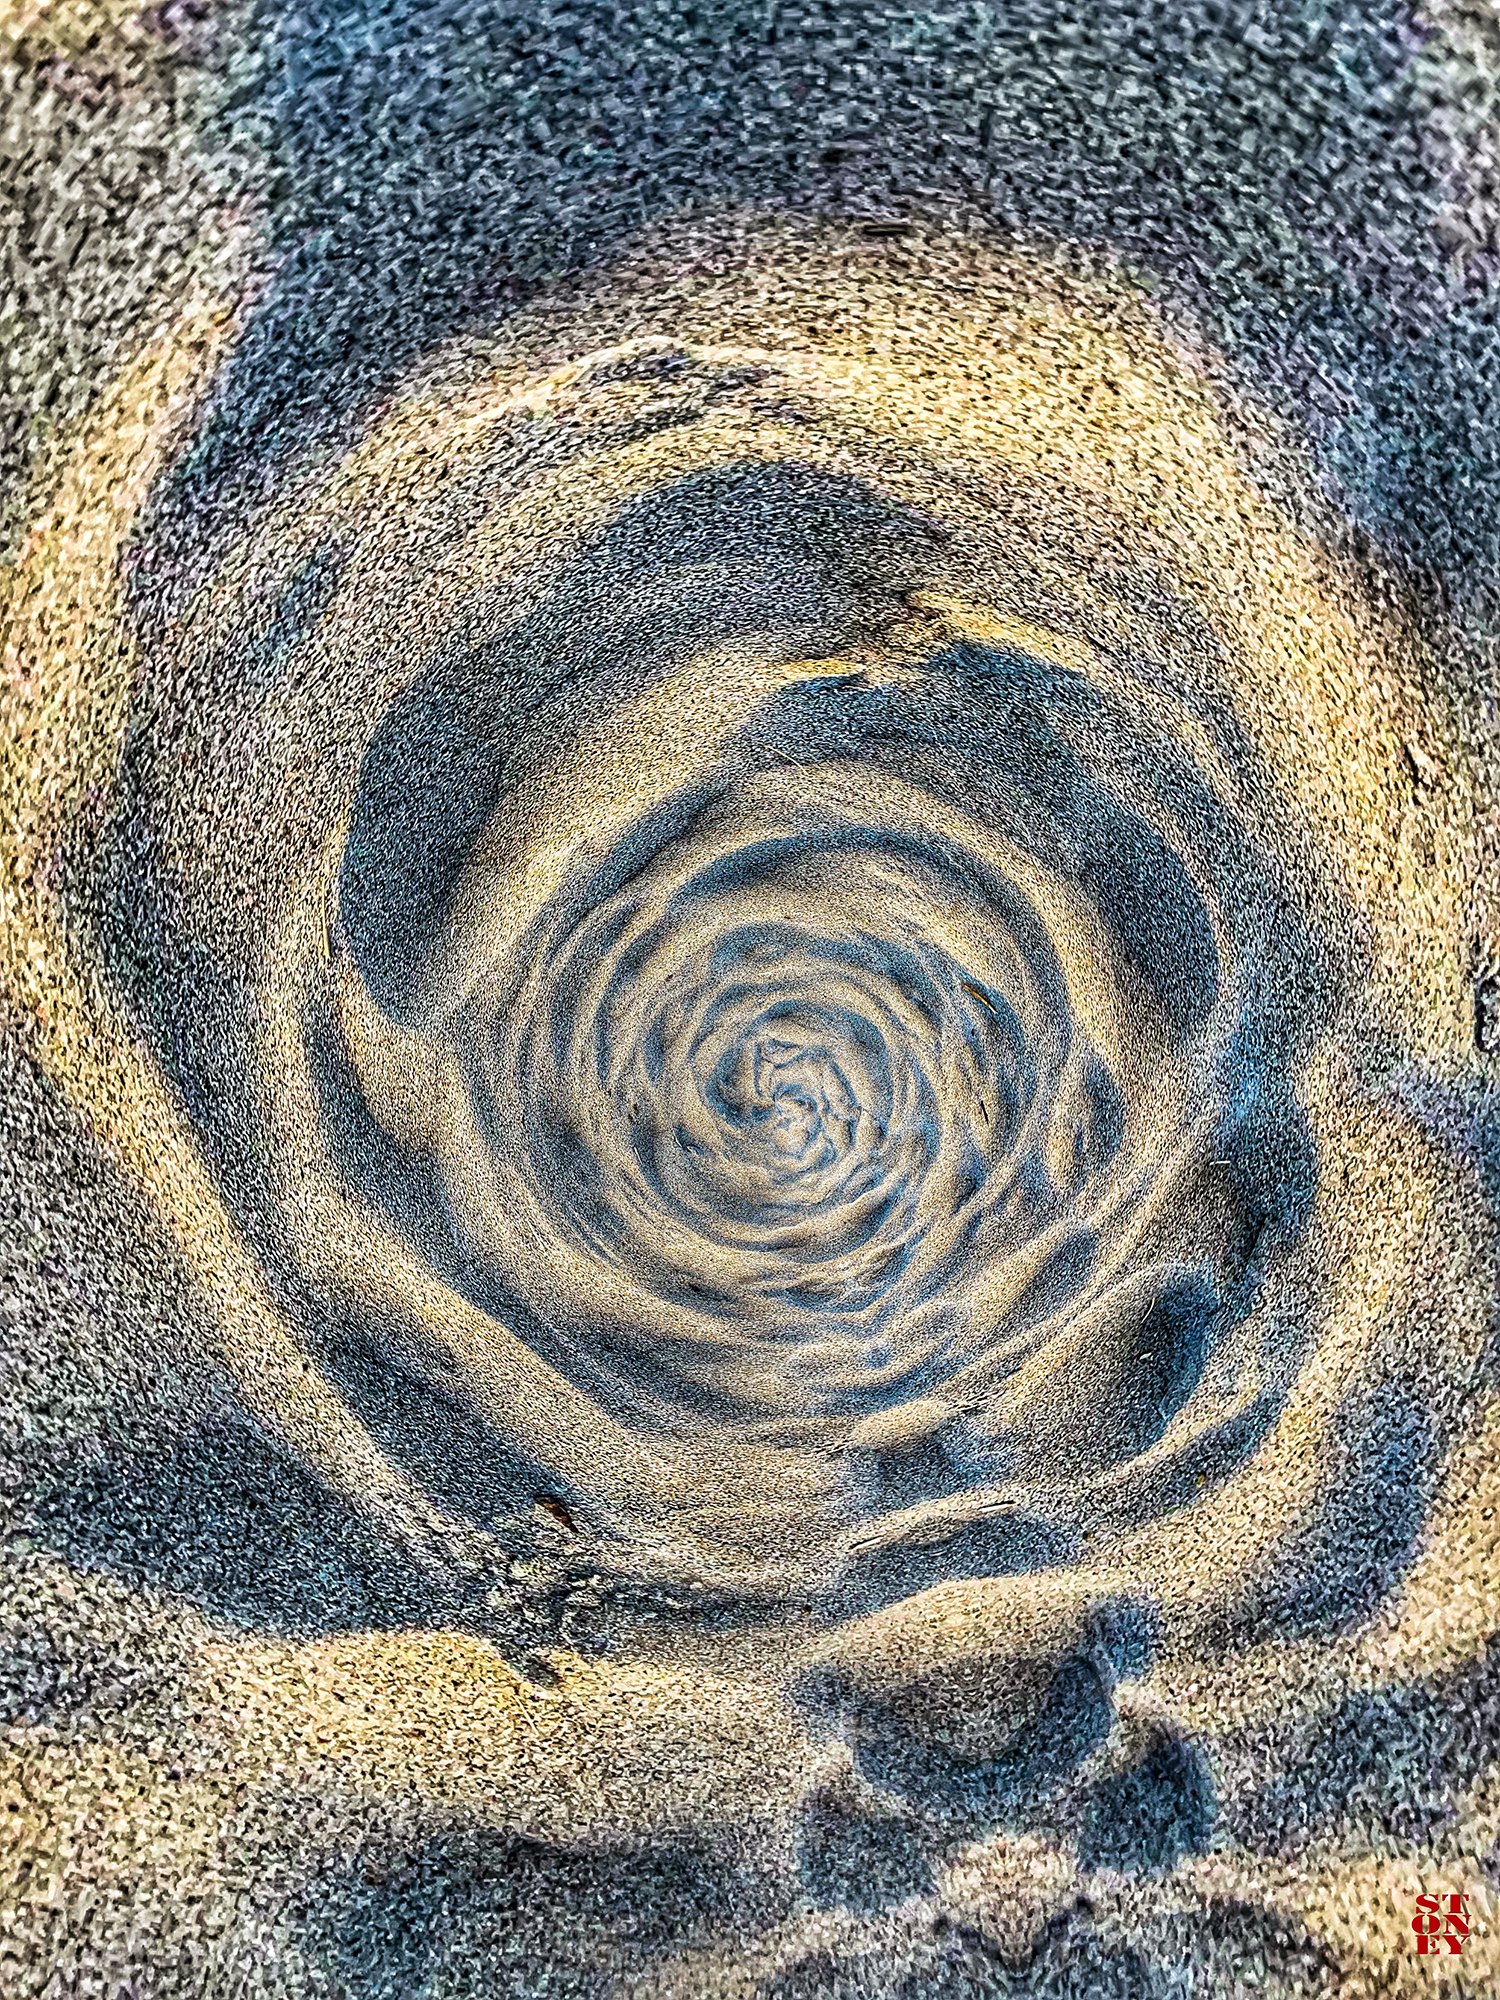 Stoney Stone - Sand Rose.jpg